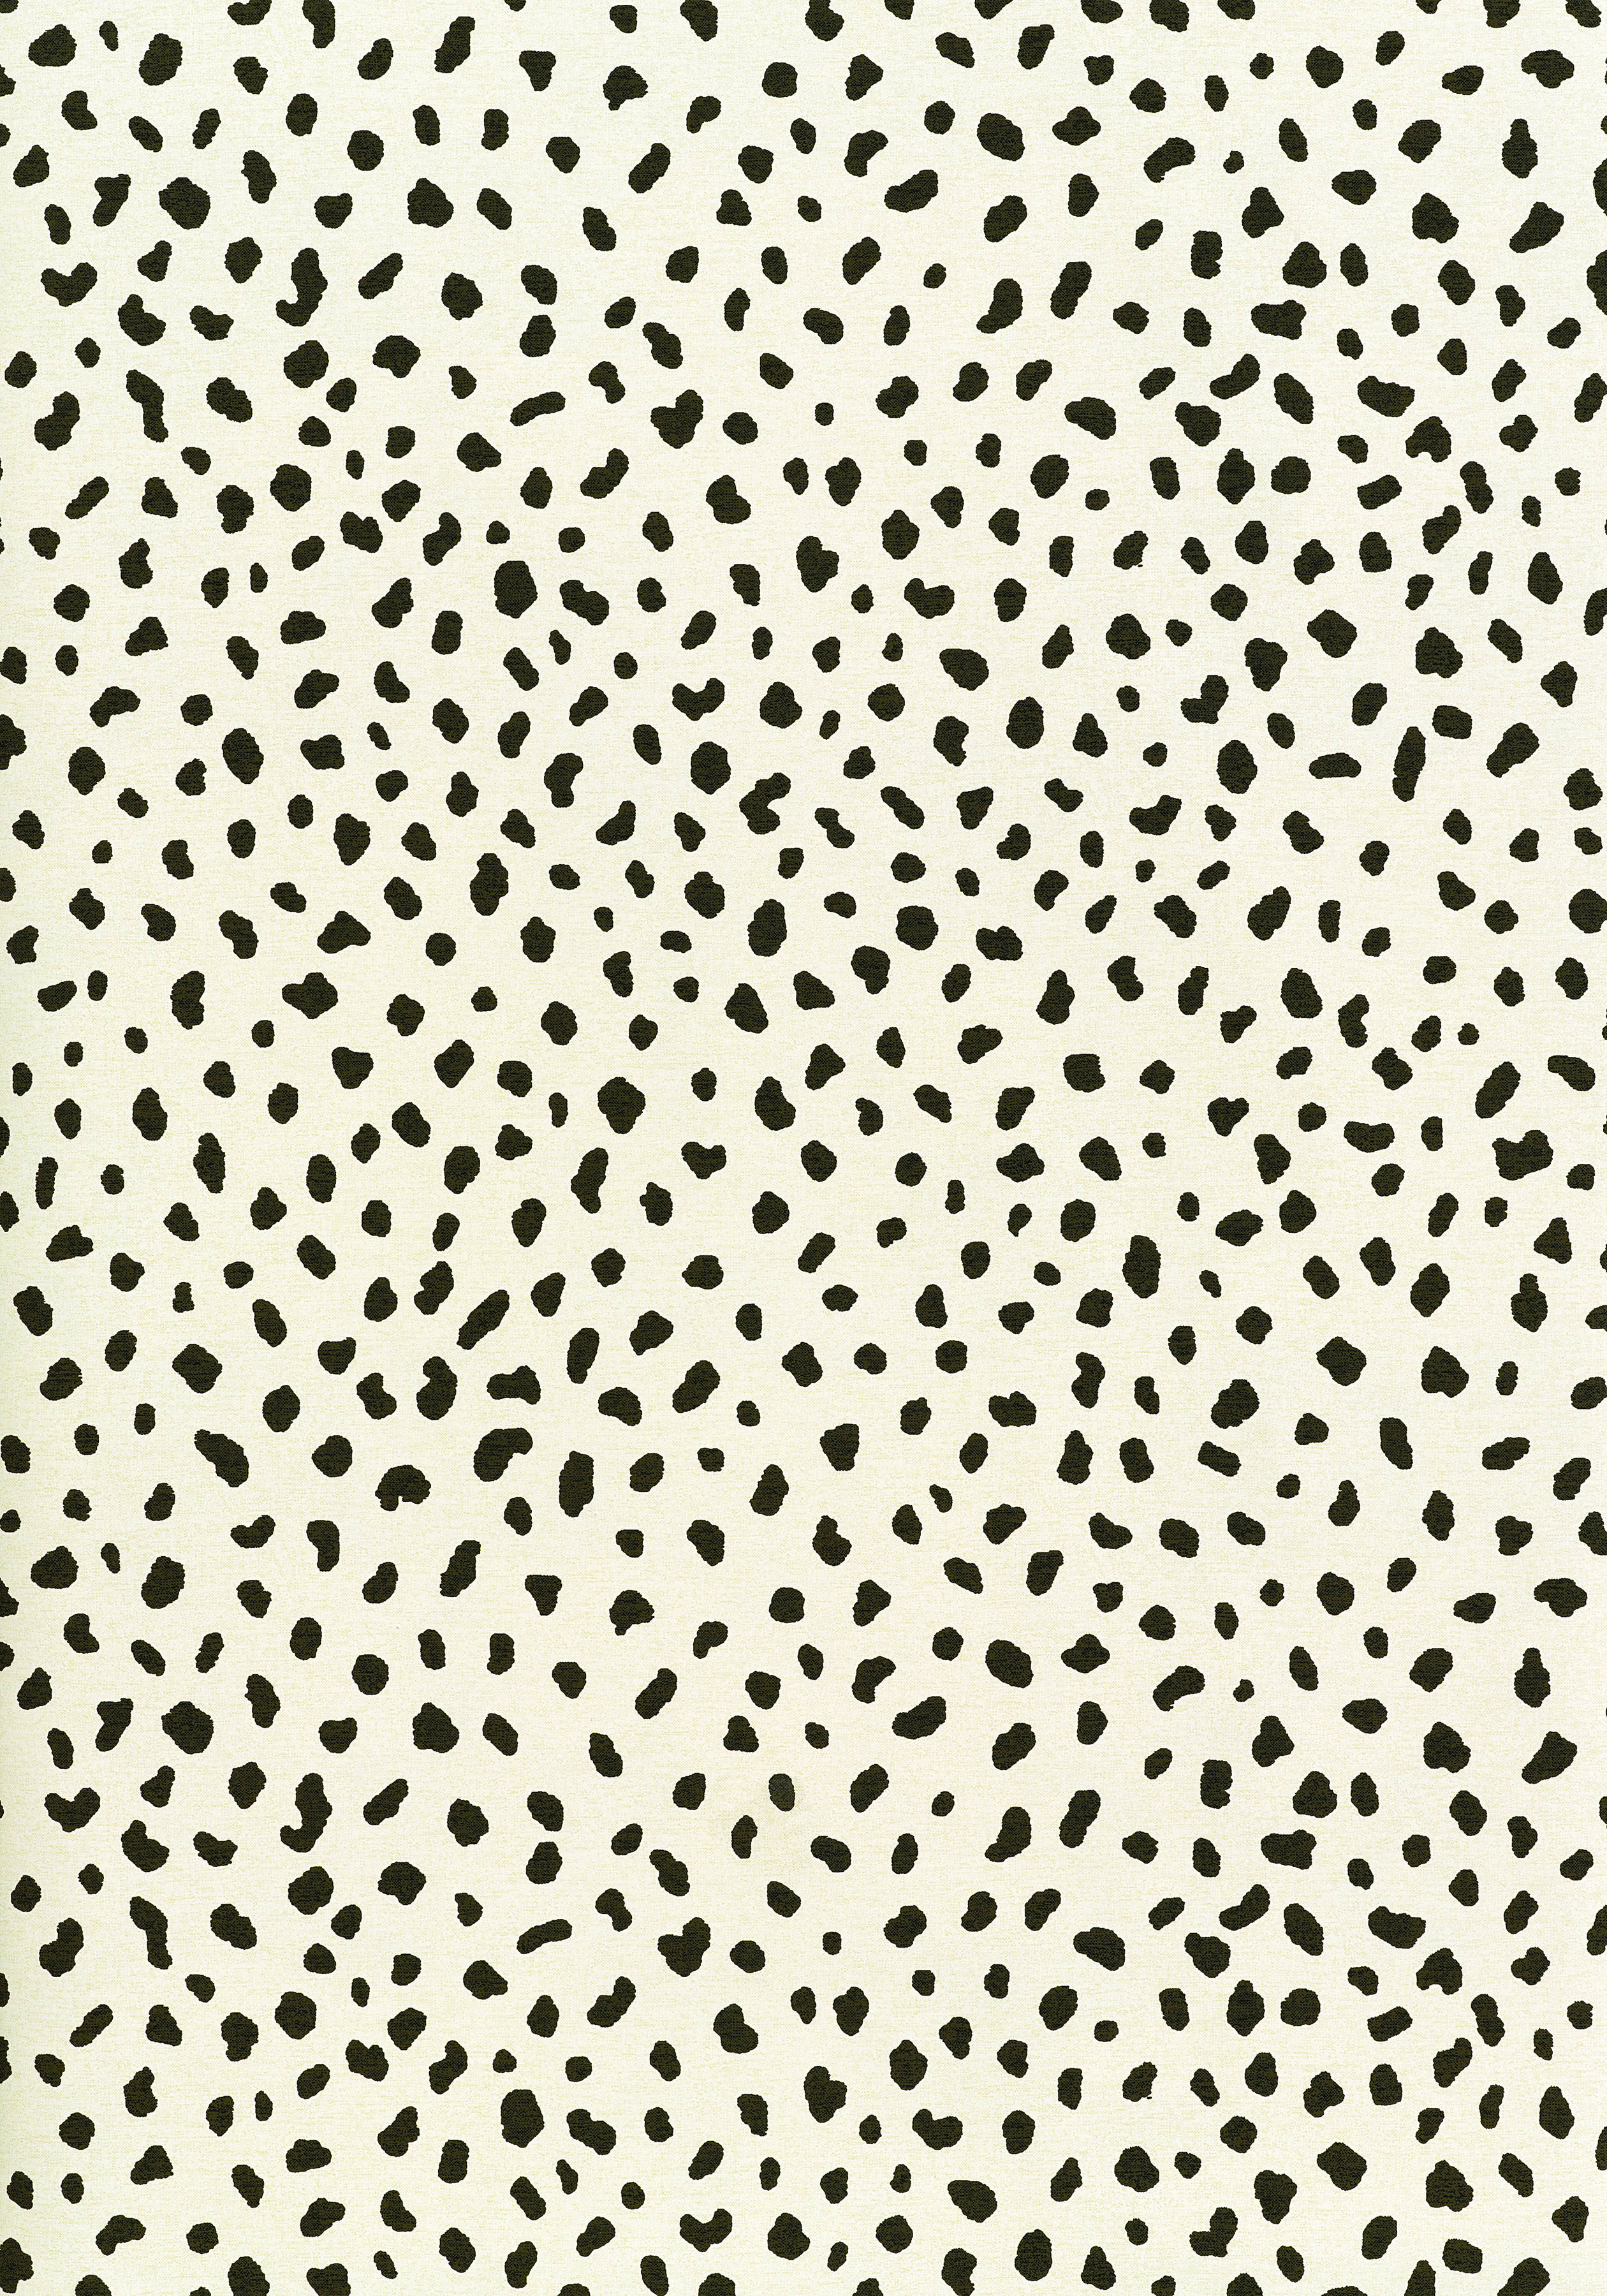 tanzania wallpepr leopard print black and white thibault design cool  wallpaper ideas pinterest diy affordable wallpaper design shop room ideas –  Shop Room Ideas